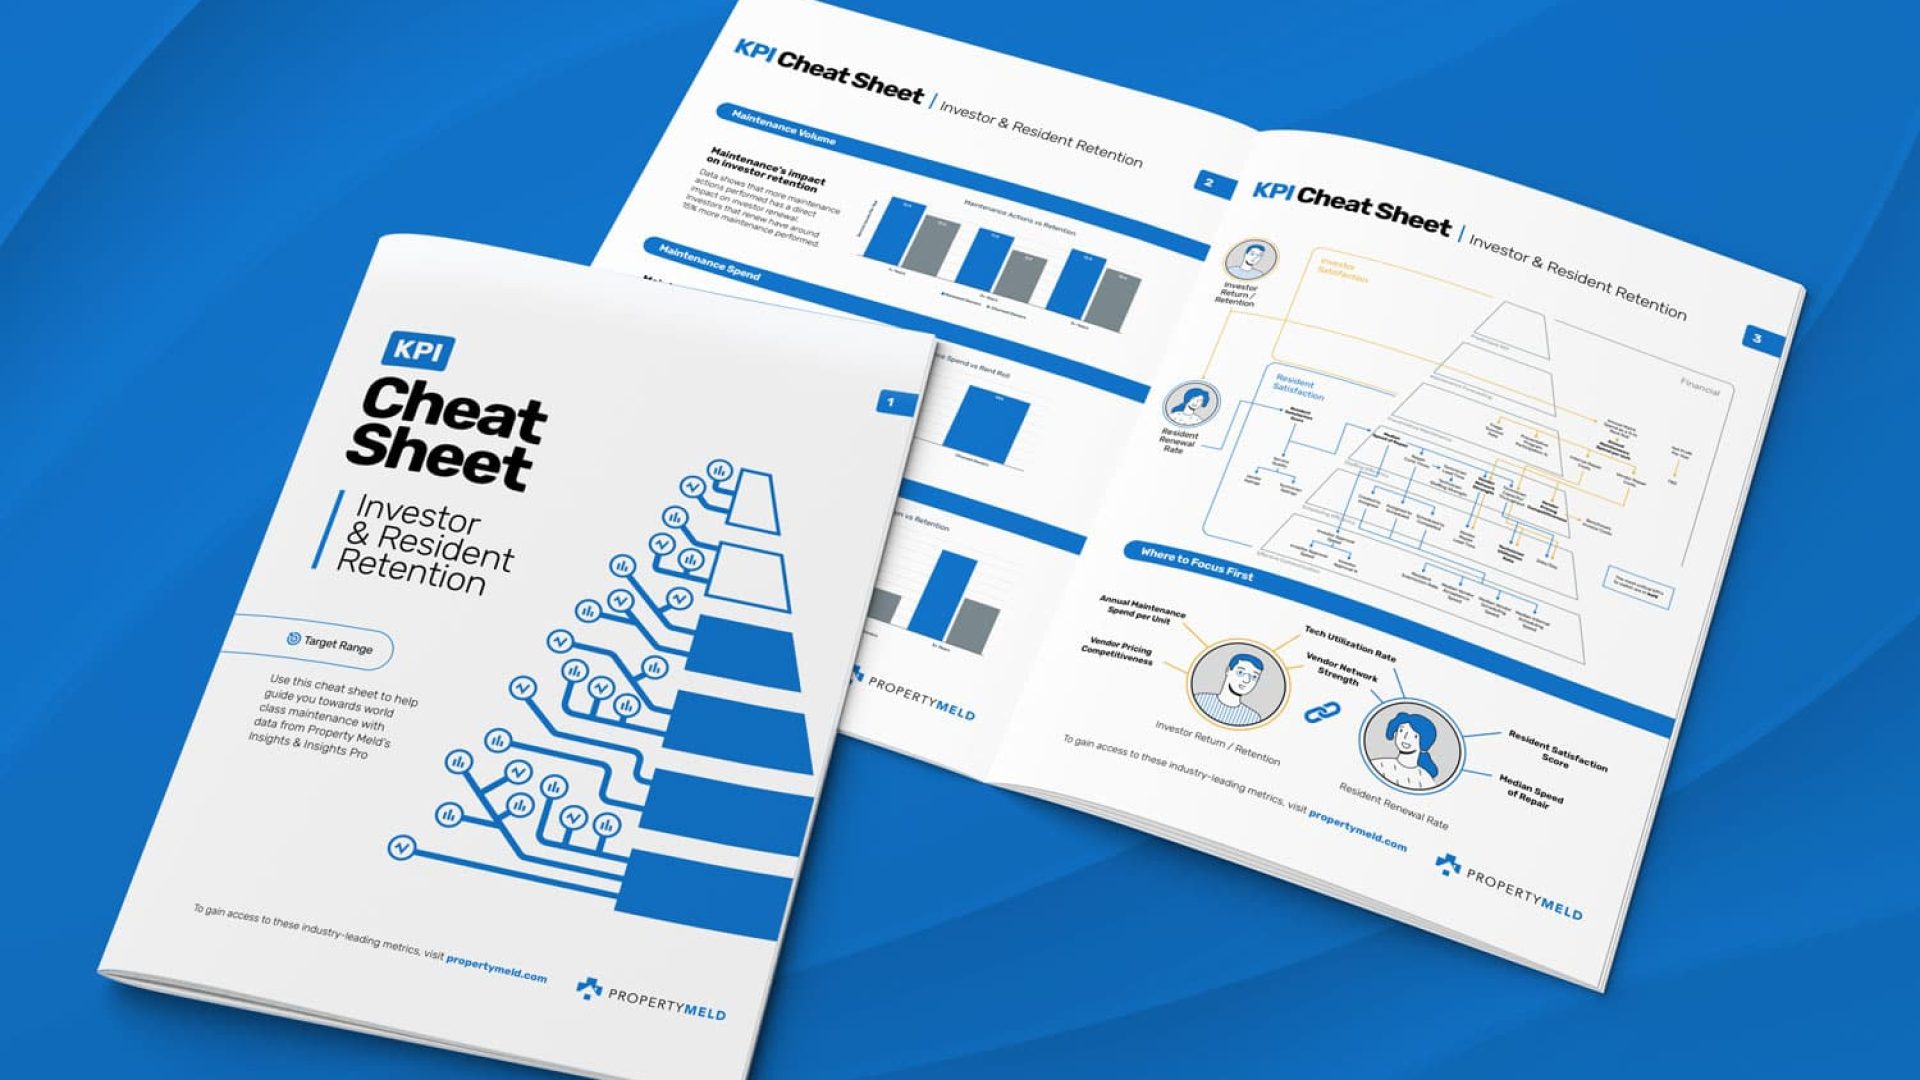 Pamphlet for Investor and Resident Retention KPI Cheat Sheet